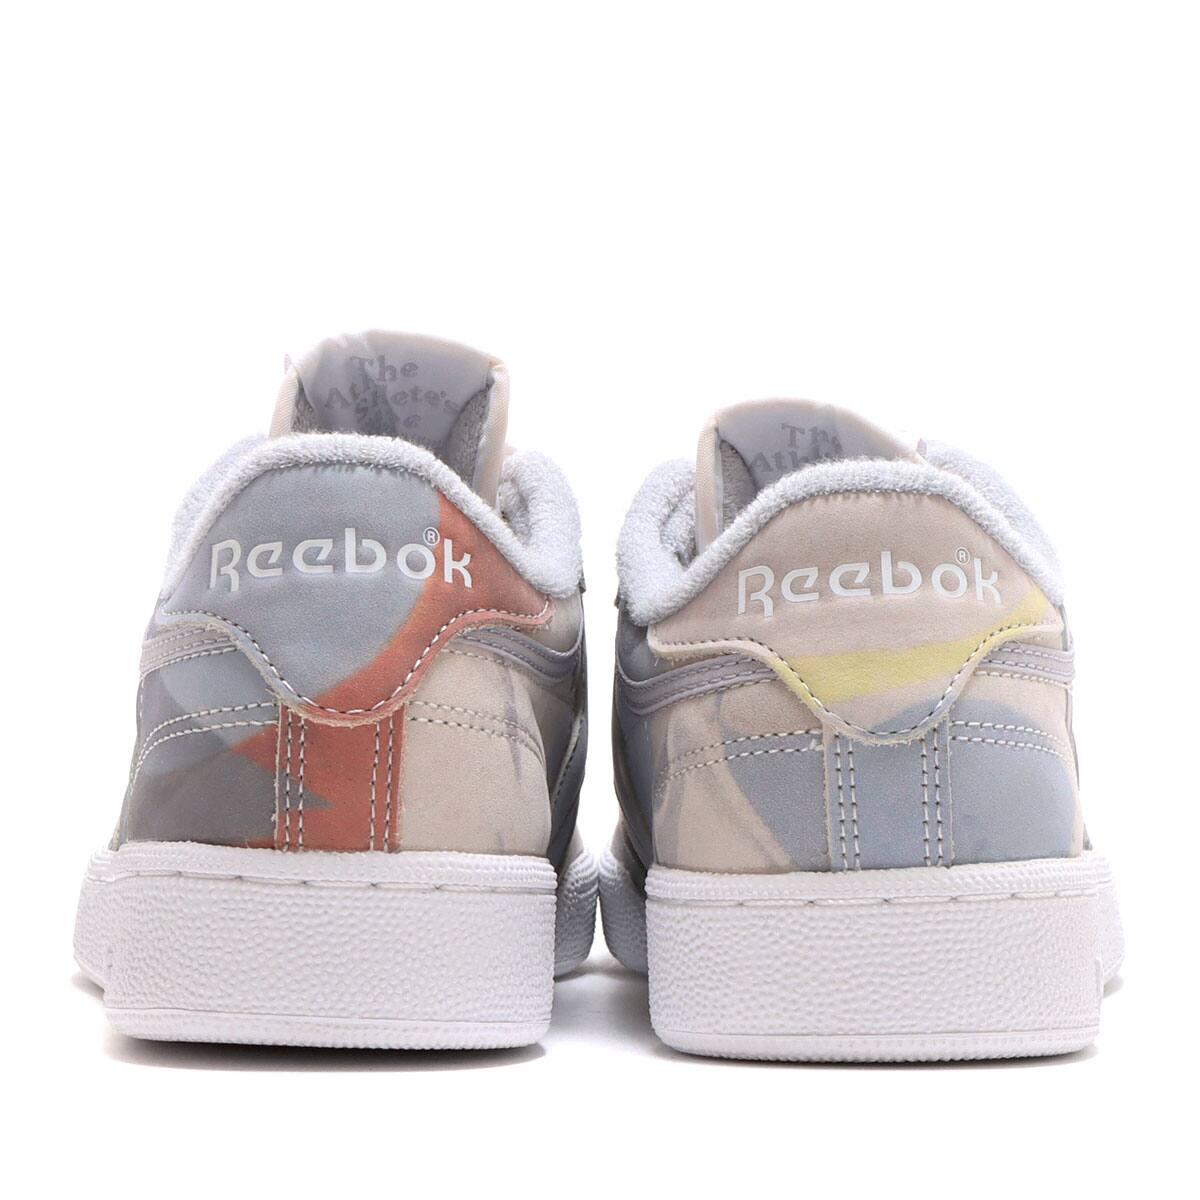 Reebok x Eames CLUB C 85 FOOTWEAR WHITE/FOOTWEAR WHITE/COLD GRAY 21FW-I